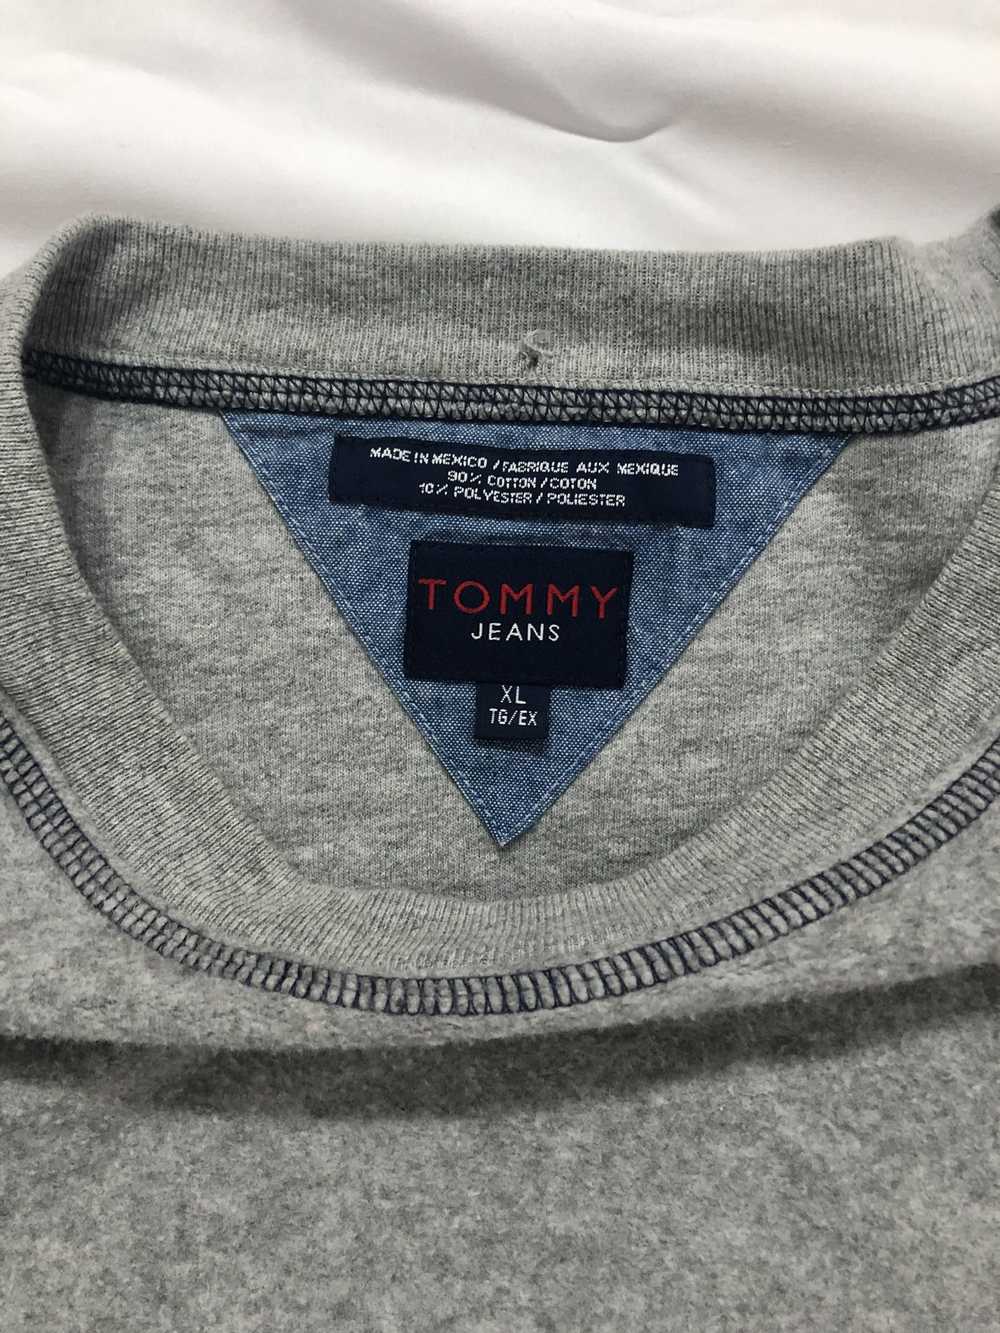 Tommy Hilfiger Tommy Hilfiger Jeans Sweater - image 3